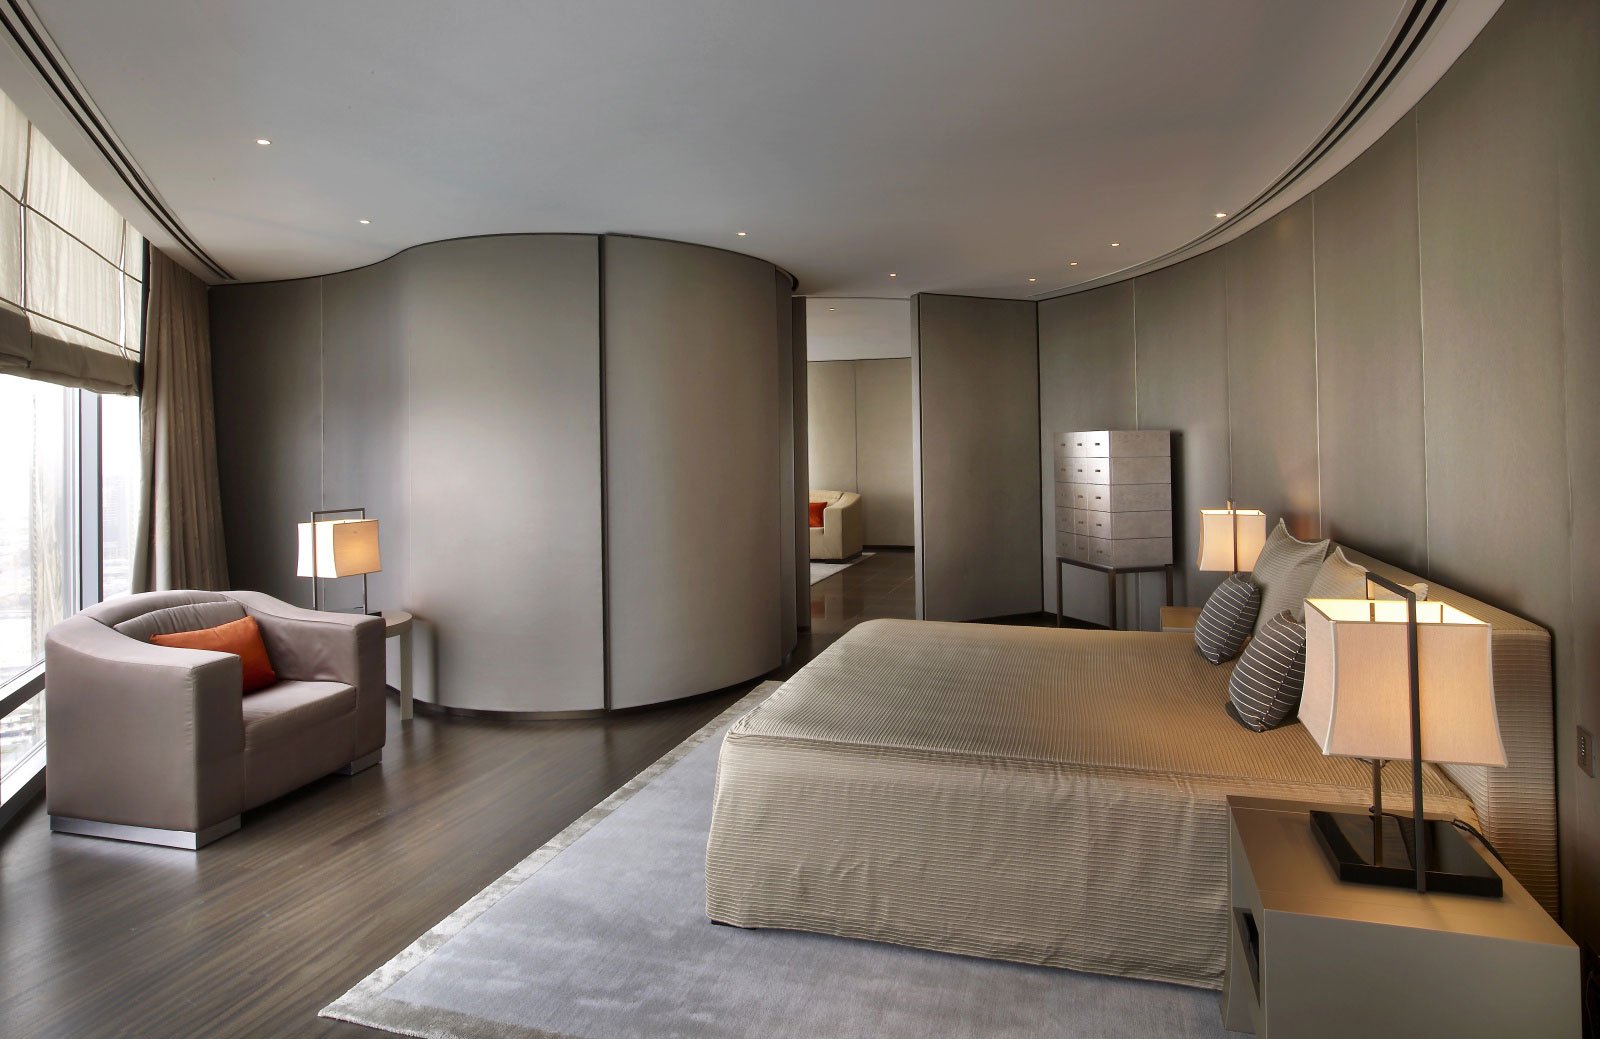 Armani Hotel Dubai By Wilson Associates Caandesign Architecture And Home Design Blog